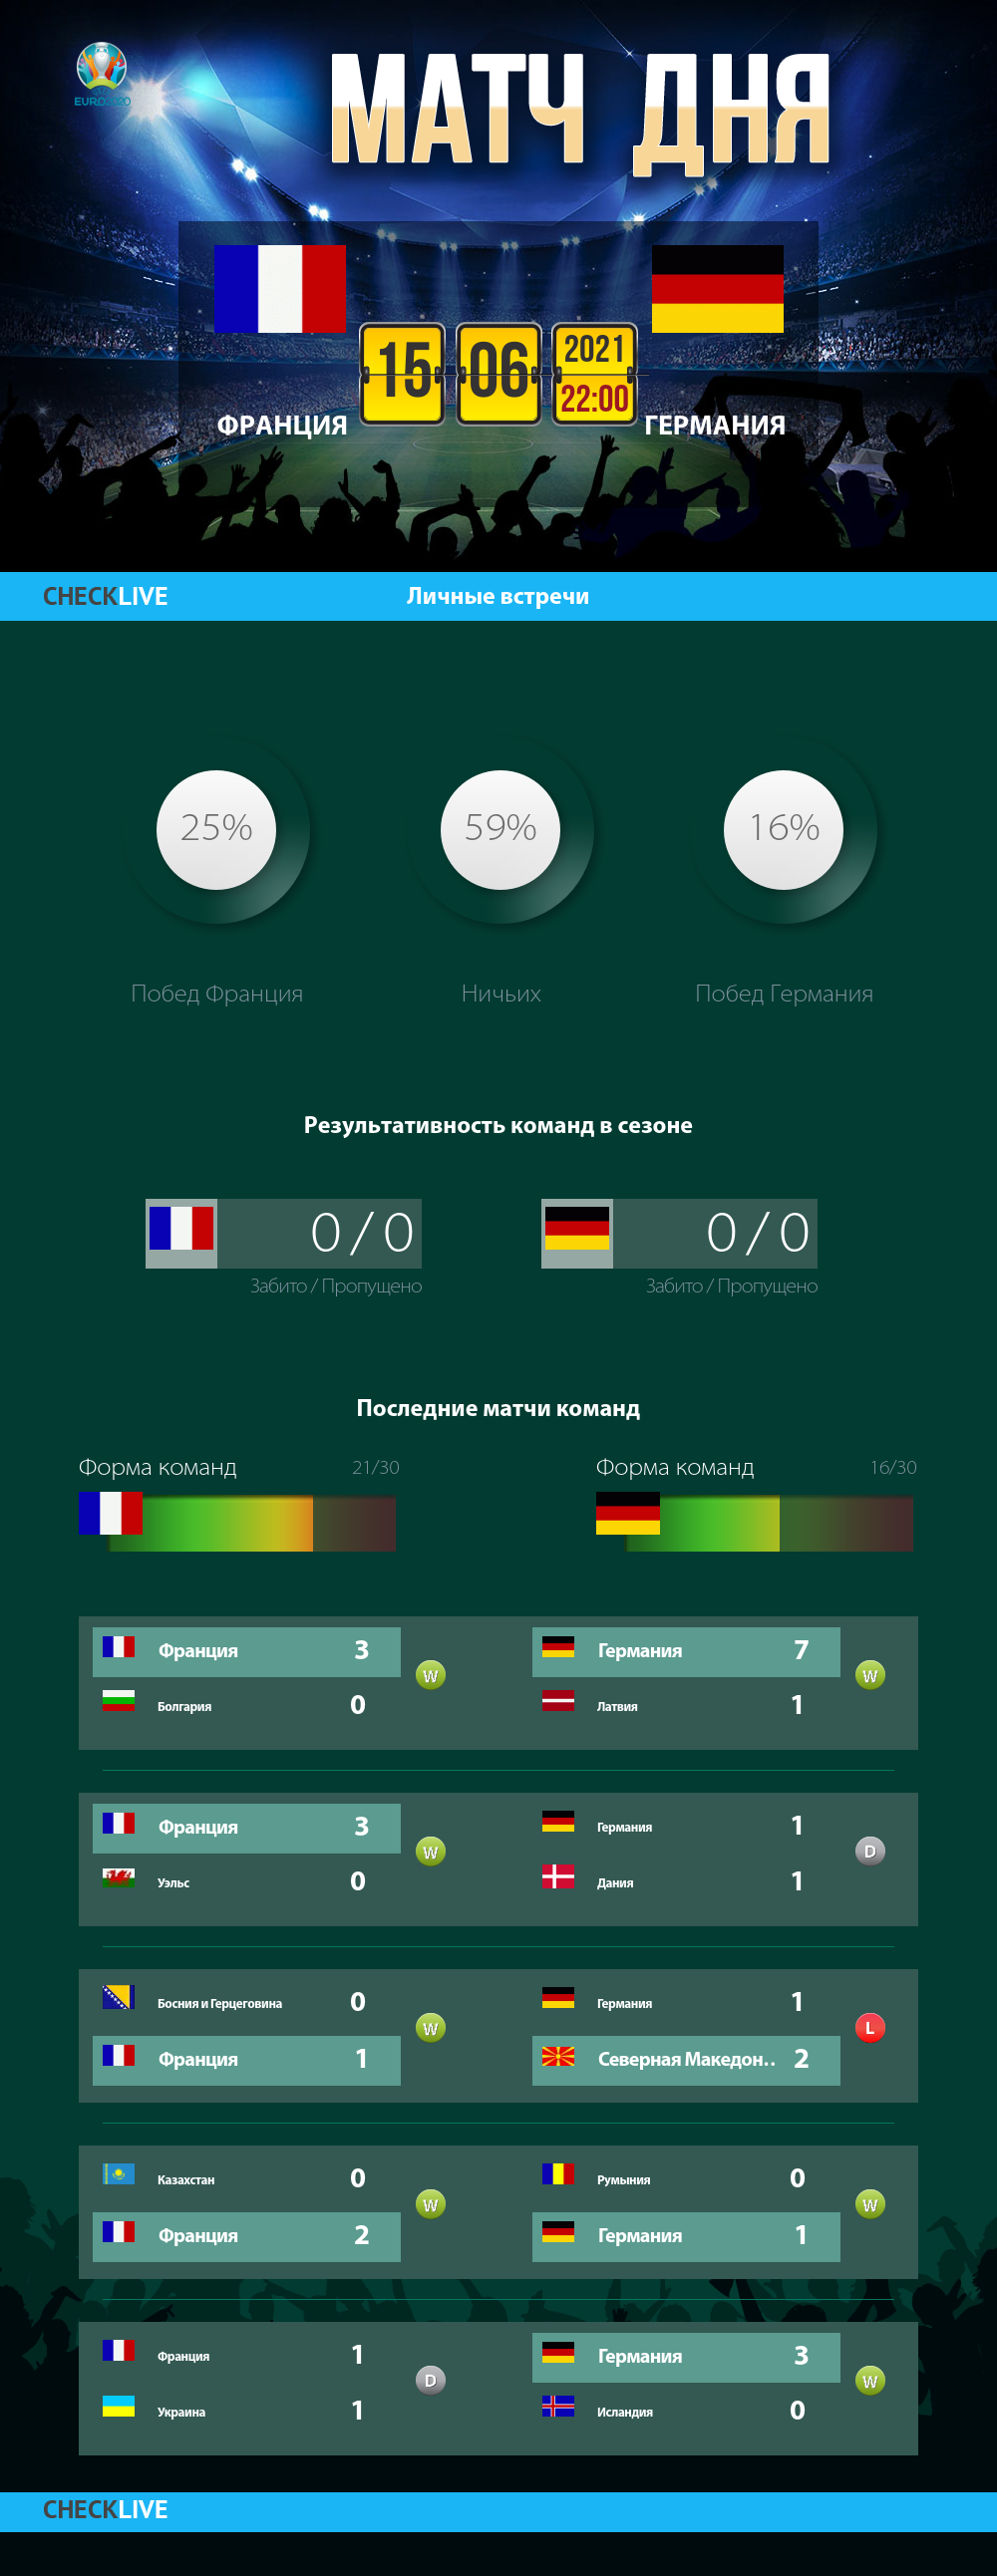 Инфографика Франция и Германия матч дня 15.06.2021